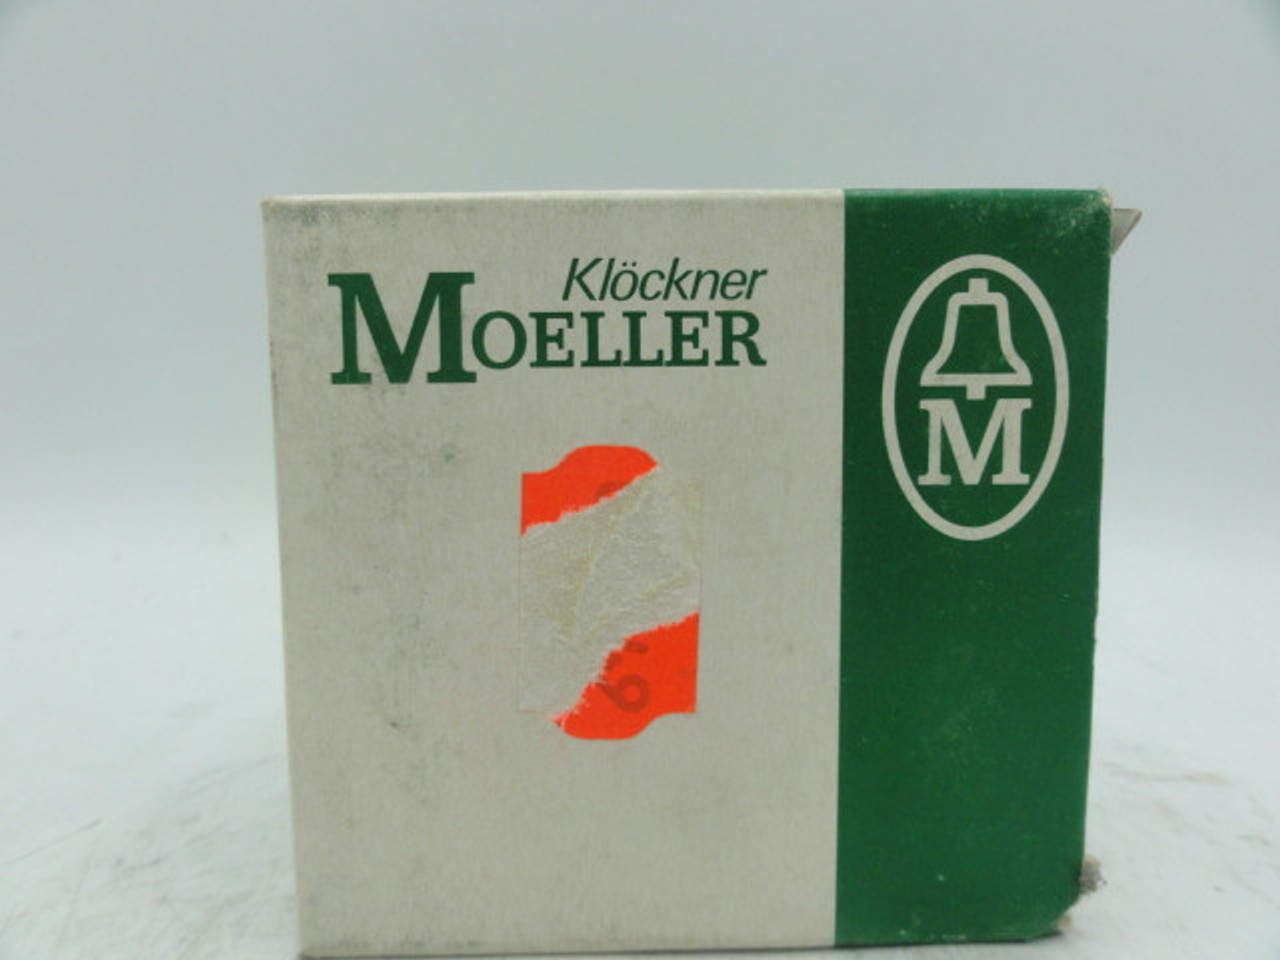 Klockner Moeller PKZM1-4 Motor Protective Switch (Box of 1) 2,4-4,0 A - New